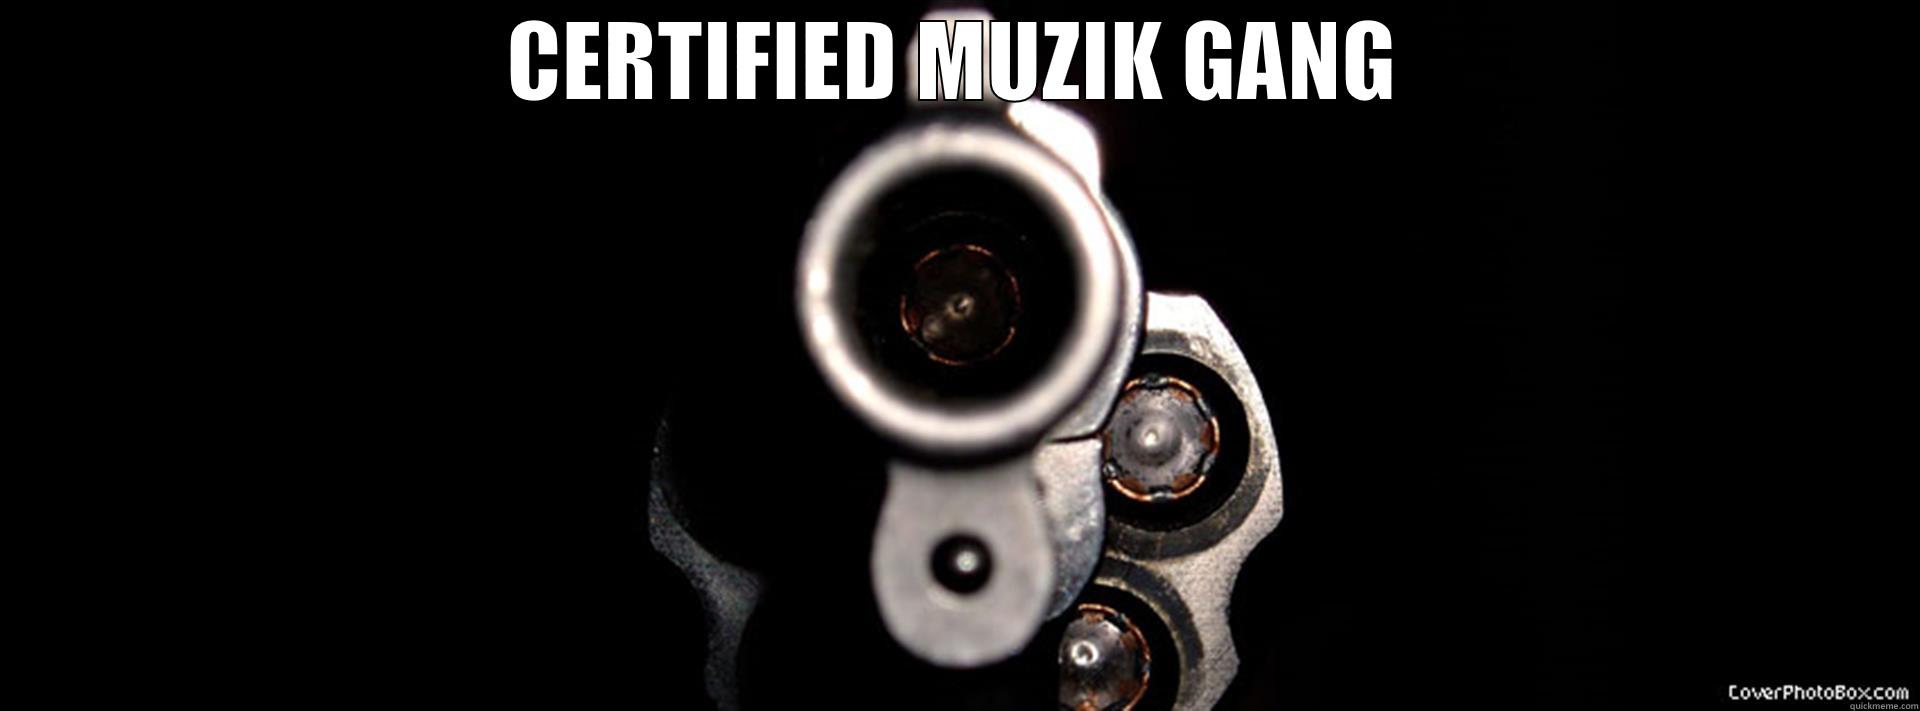 CMG Label - CERTIFIED MUZIK GANG  Misc